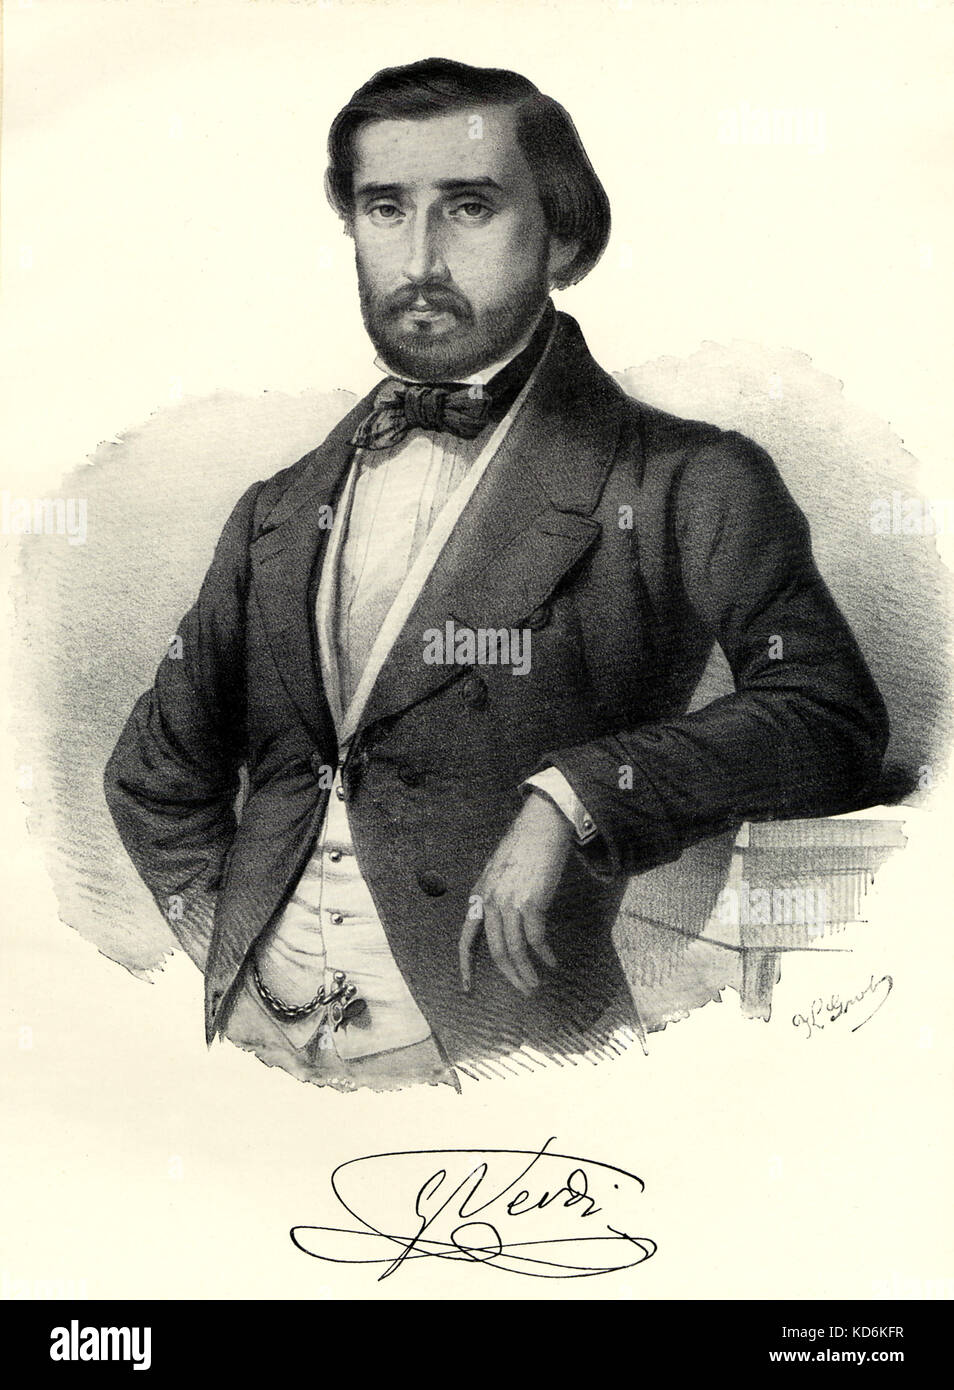 Guiseppe VERDI Portrait of the Italian composer. With Signature. Italian composer (1813-1901). Stock Photo